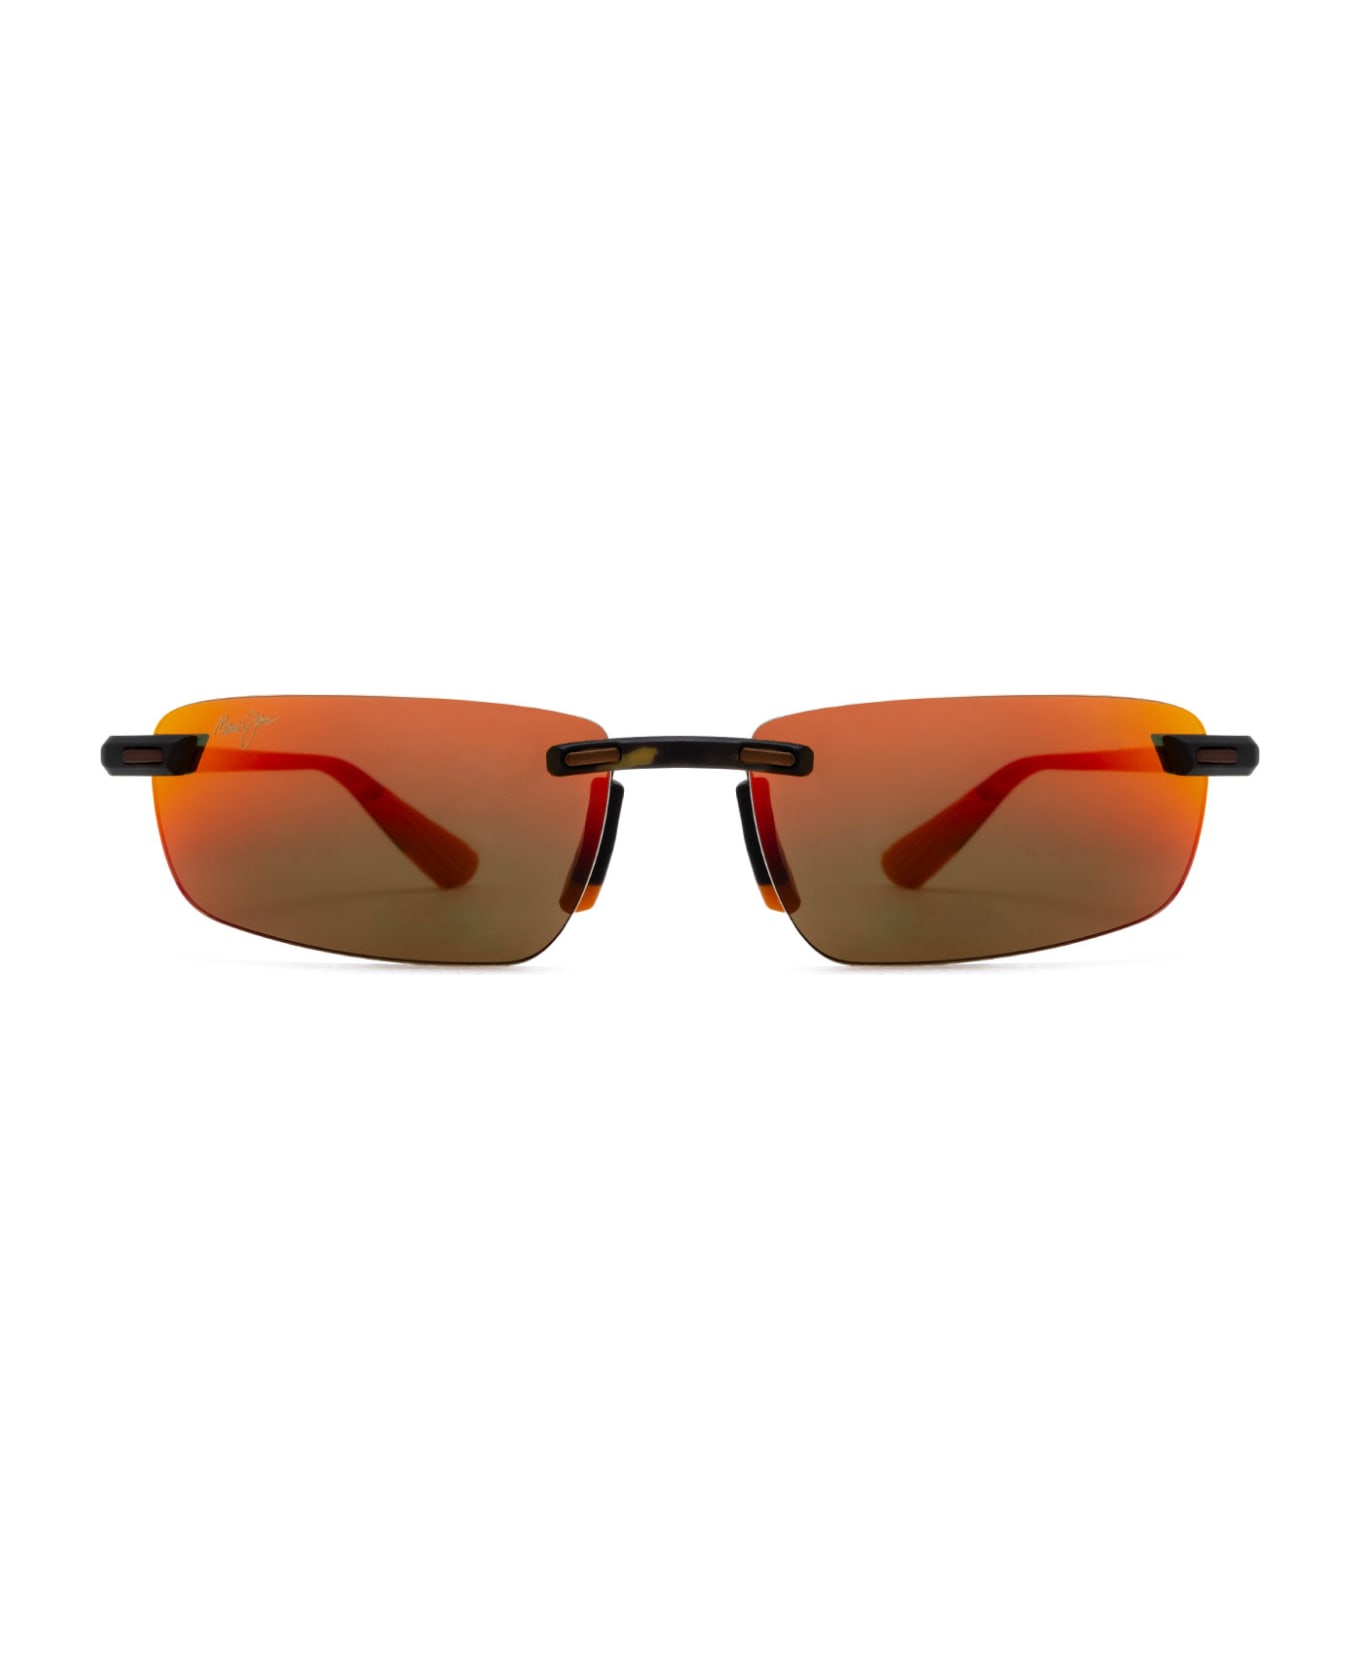 Maui Jim Mj630 Matte Dark Havana Sunglasses - Matte Dark Havana サングラス